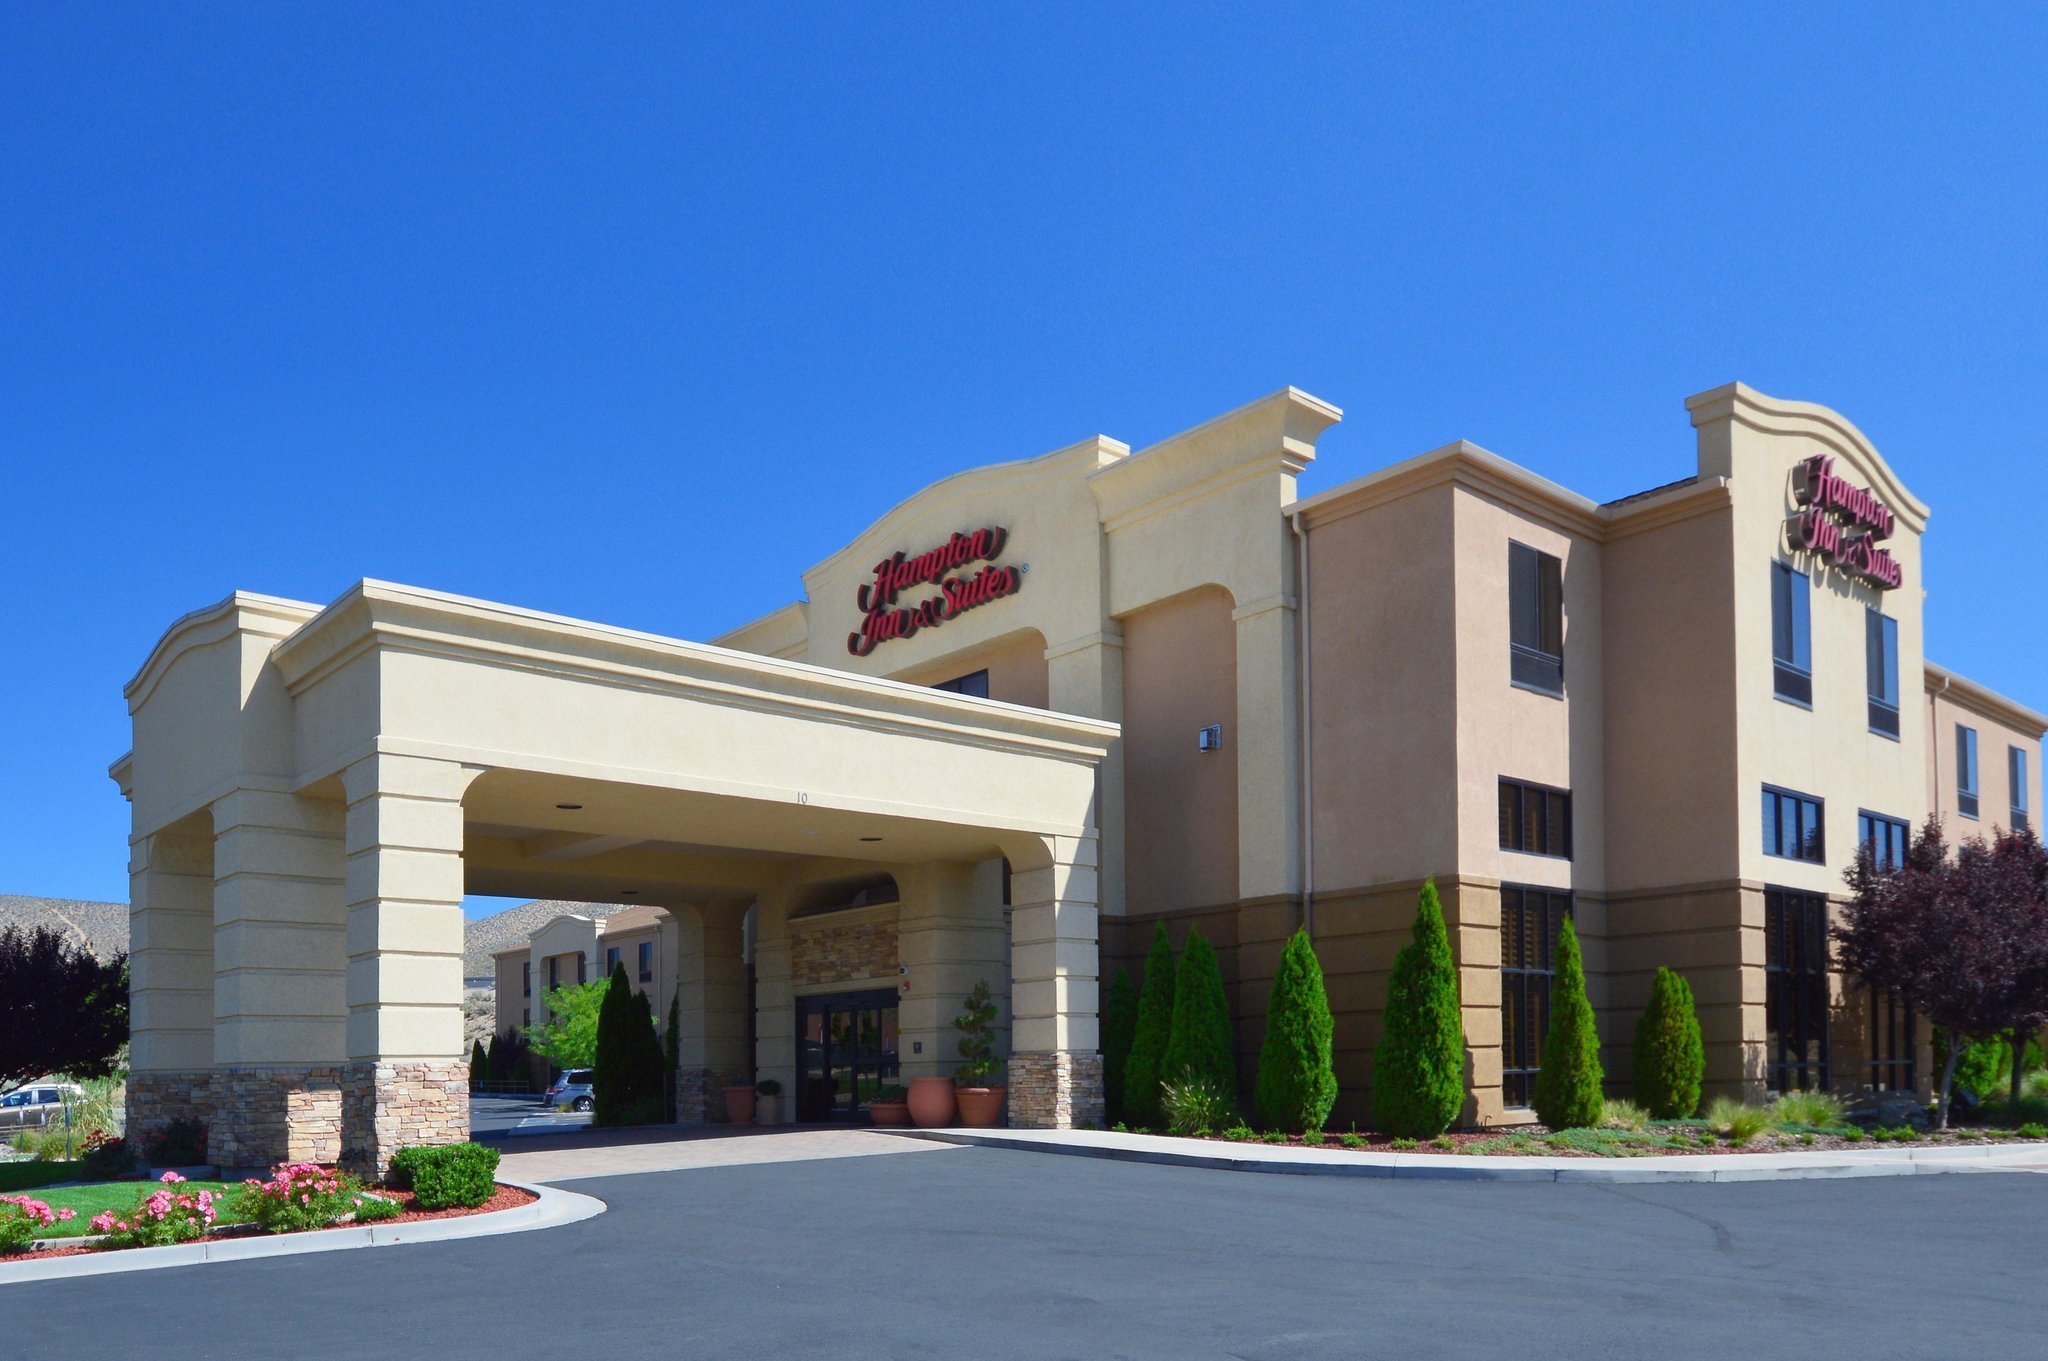 Photo of Hampton Inn & Suites Carson City, Carson City, NV